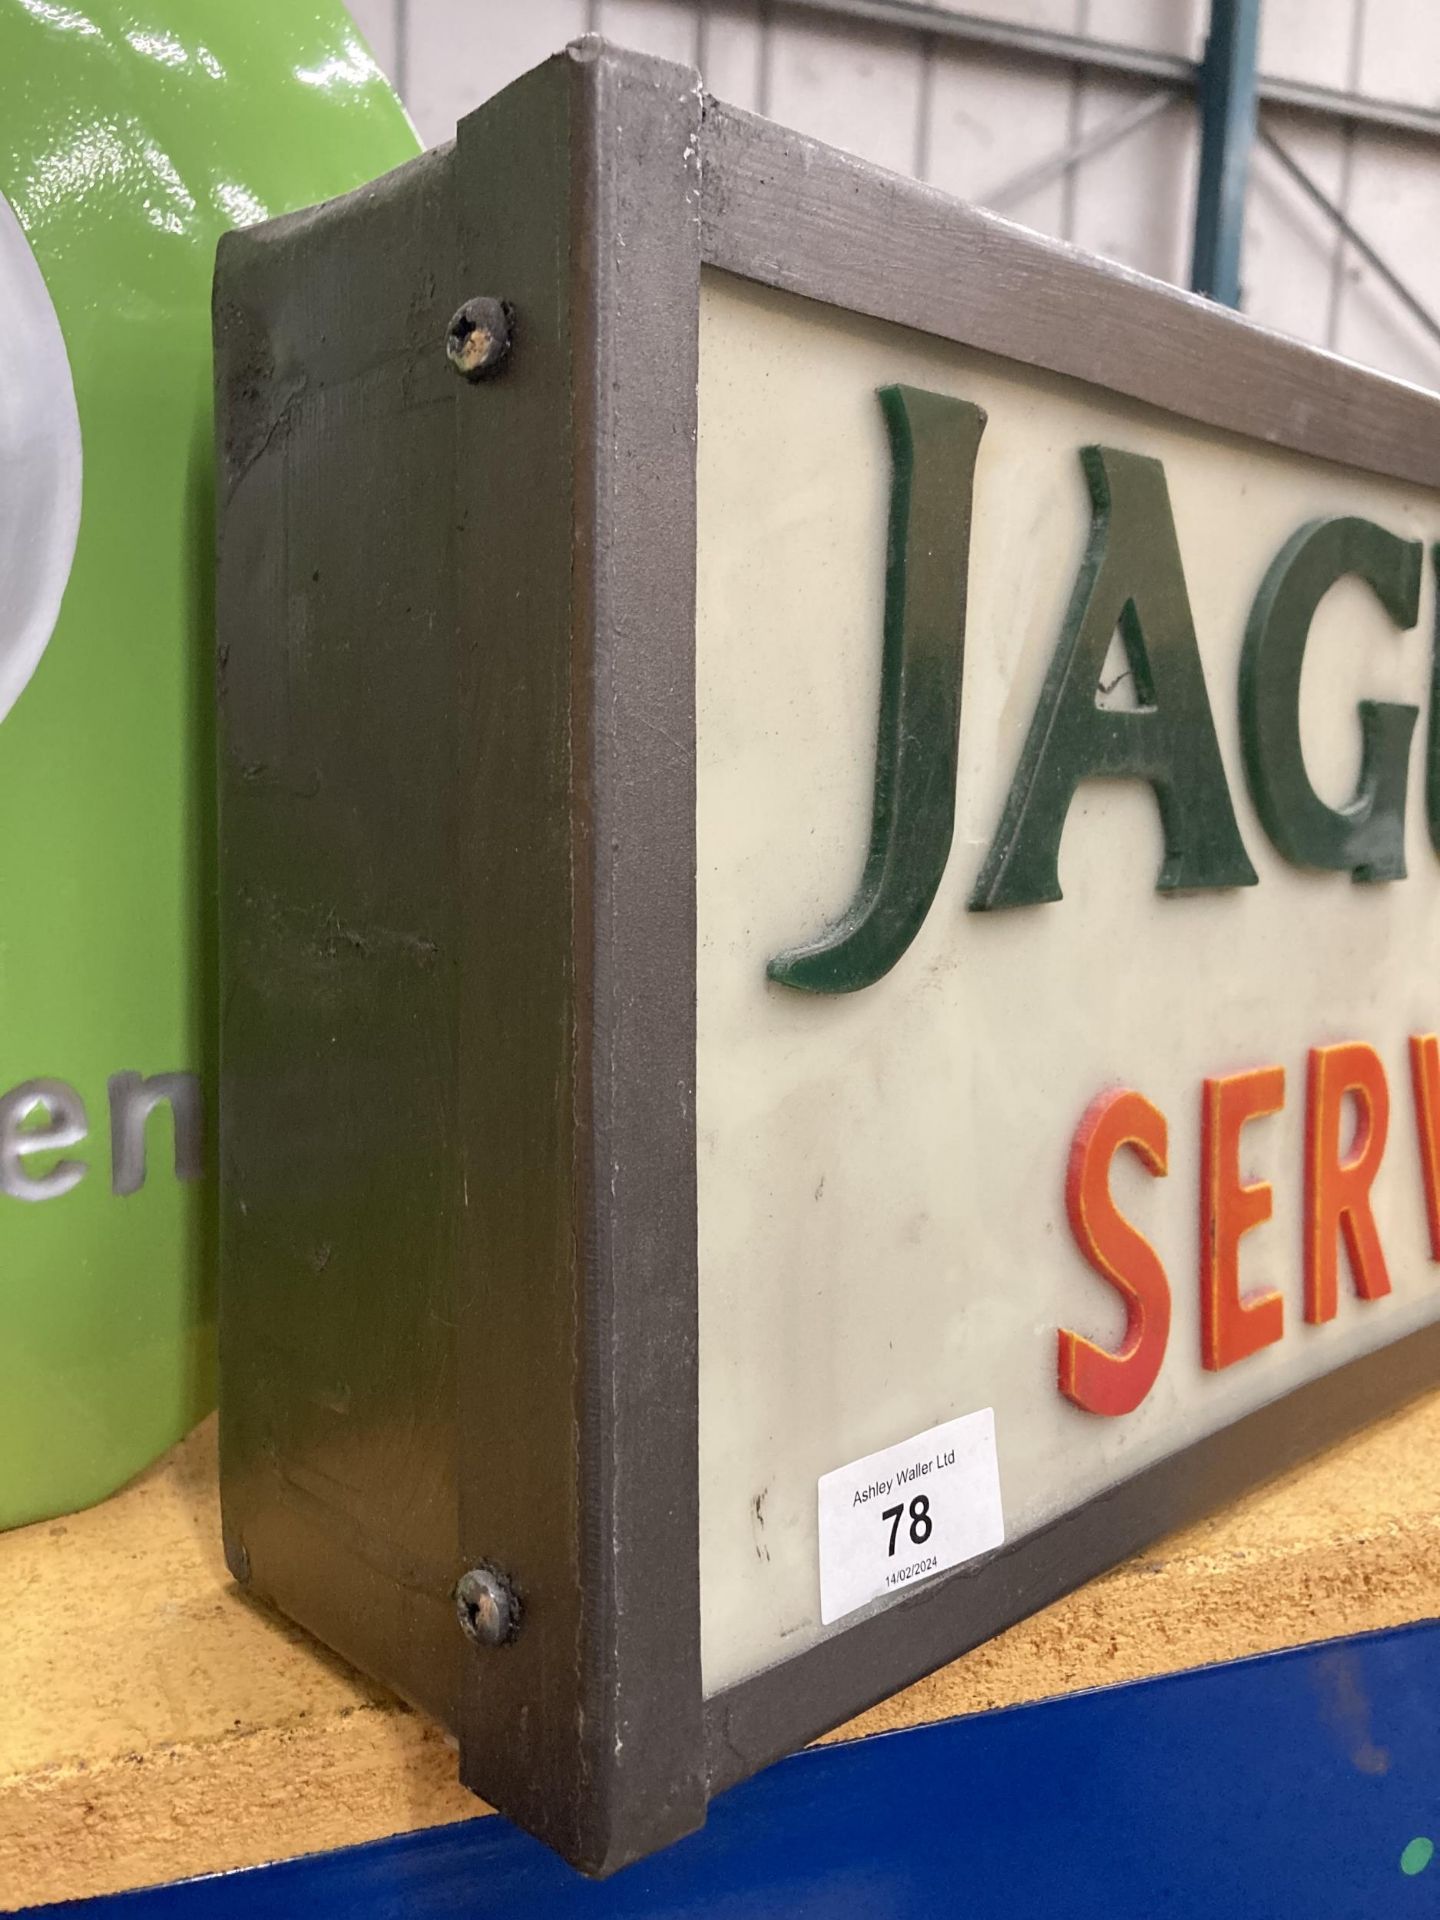 A JAGUAR SERVICE ILLUMINATED LIGHT BOX SIGN - Image 2 of 2